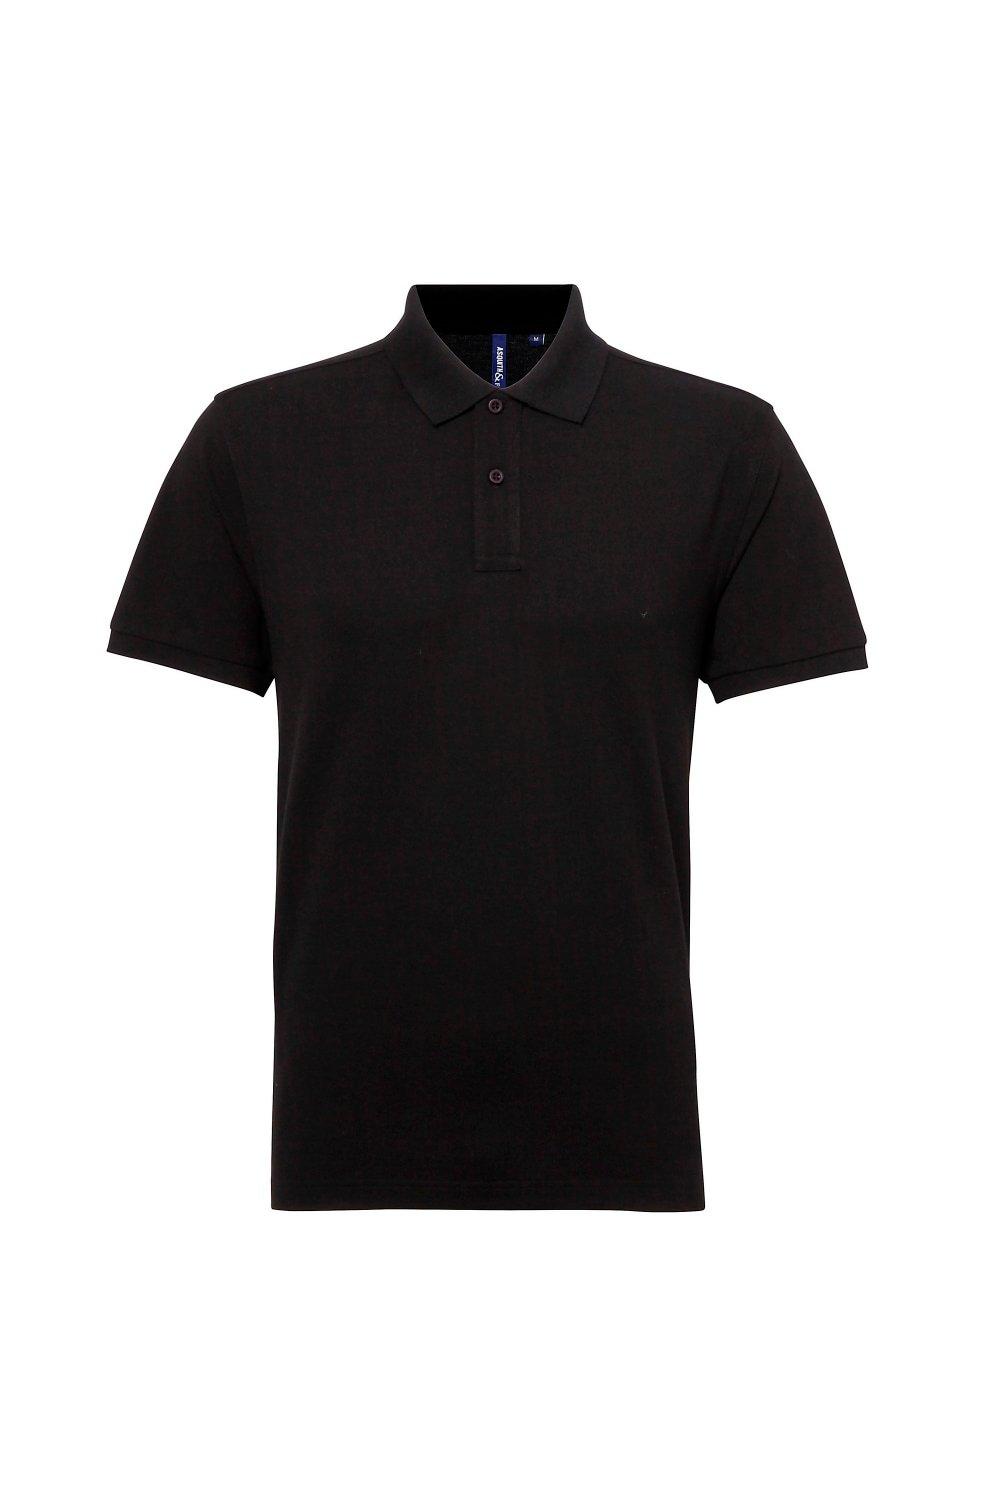 цена Рубашка поло Performance Mix с короткими рукавами Asquith & Fox, черный